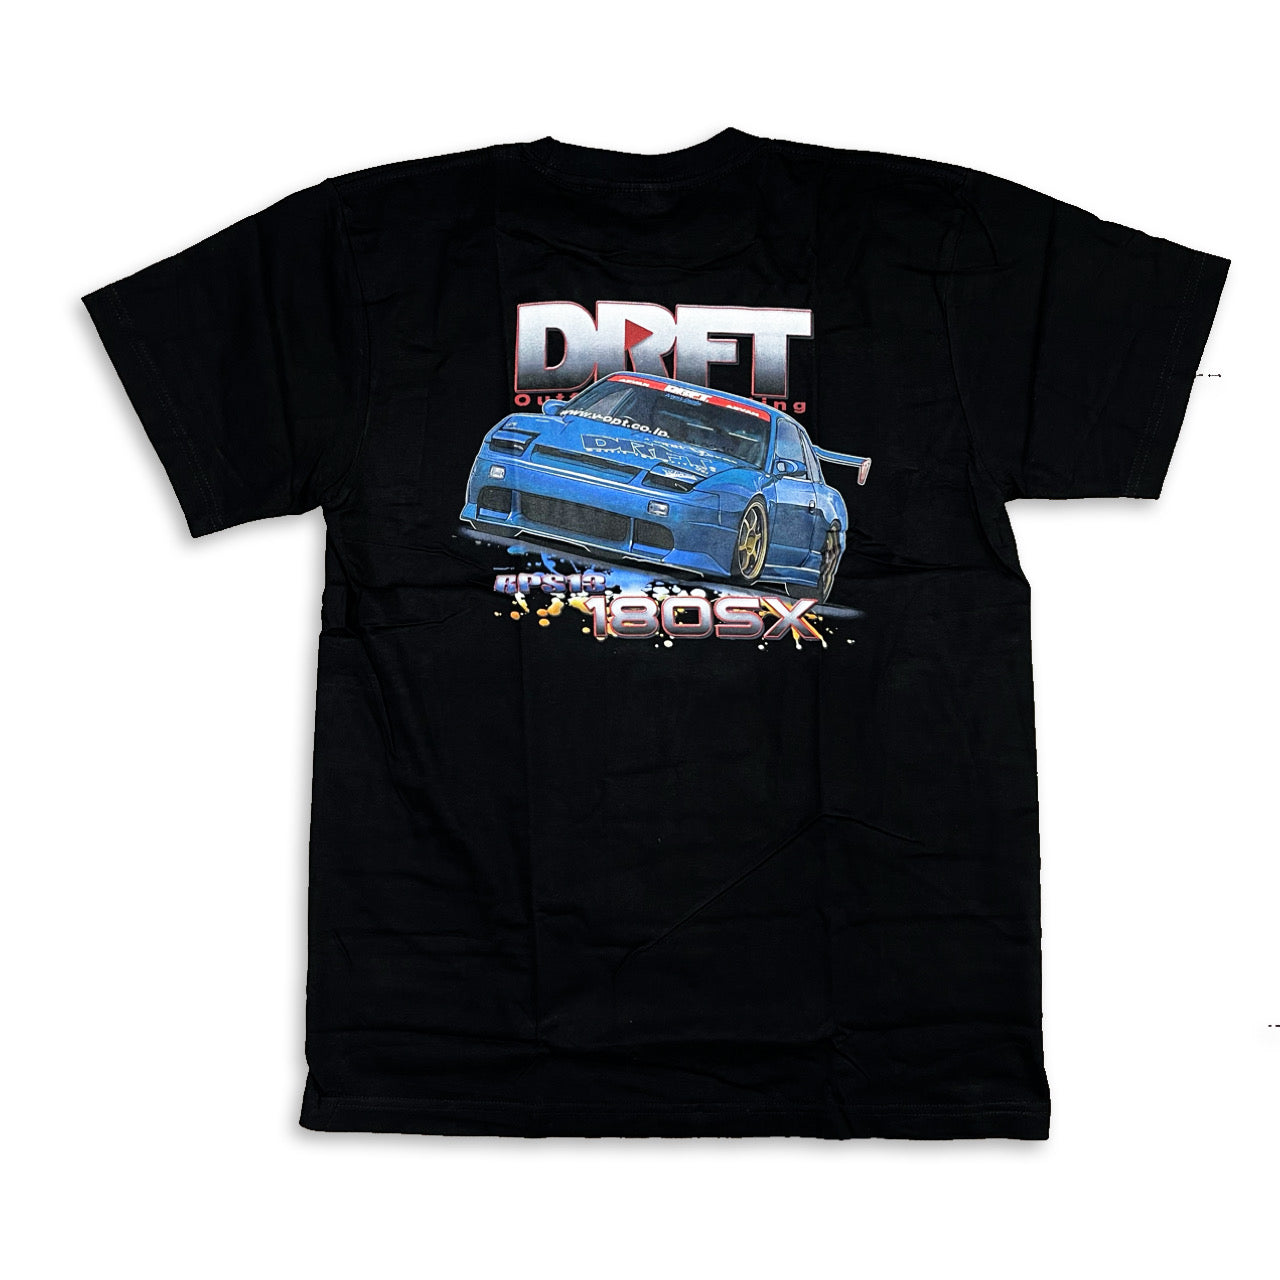 180SX RPS13 Drift  Outfit for Drifting T-shirt Black